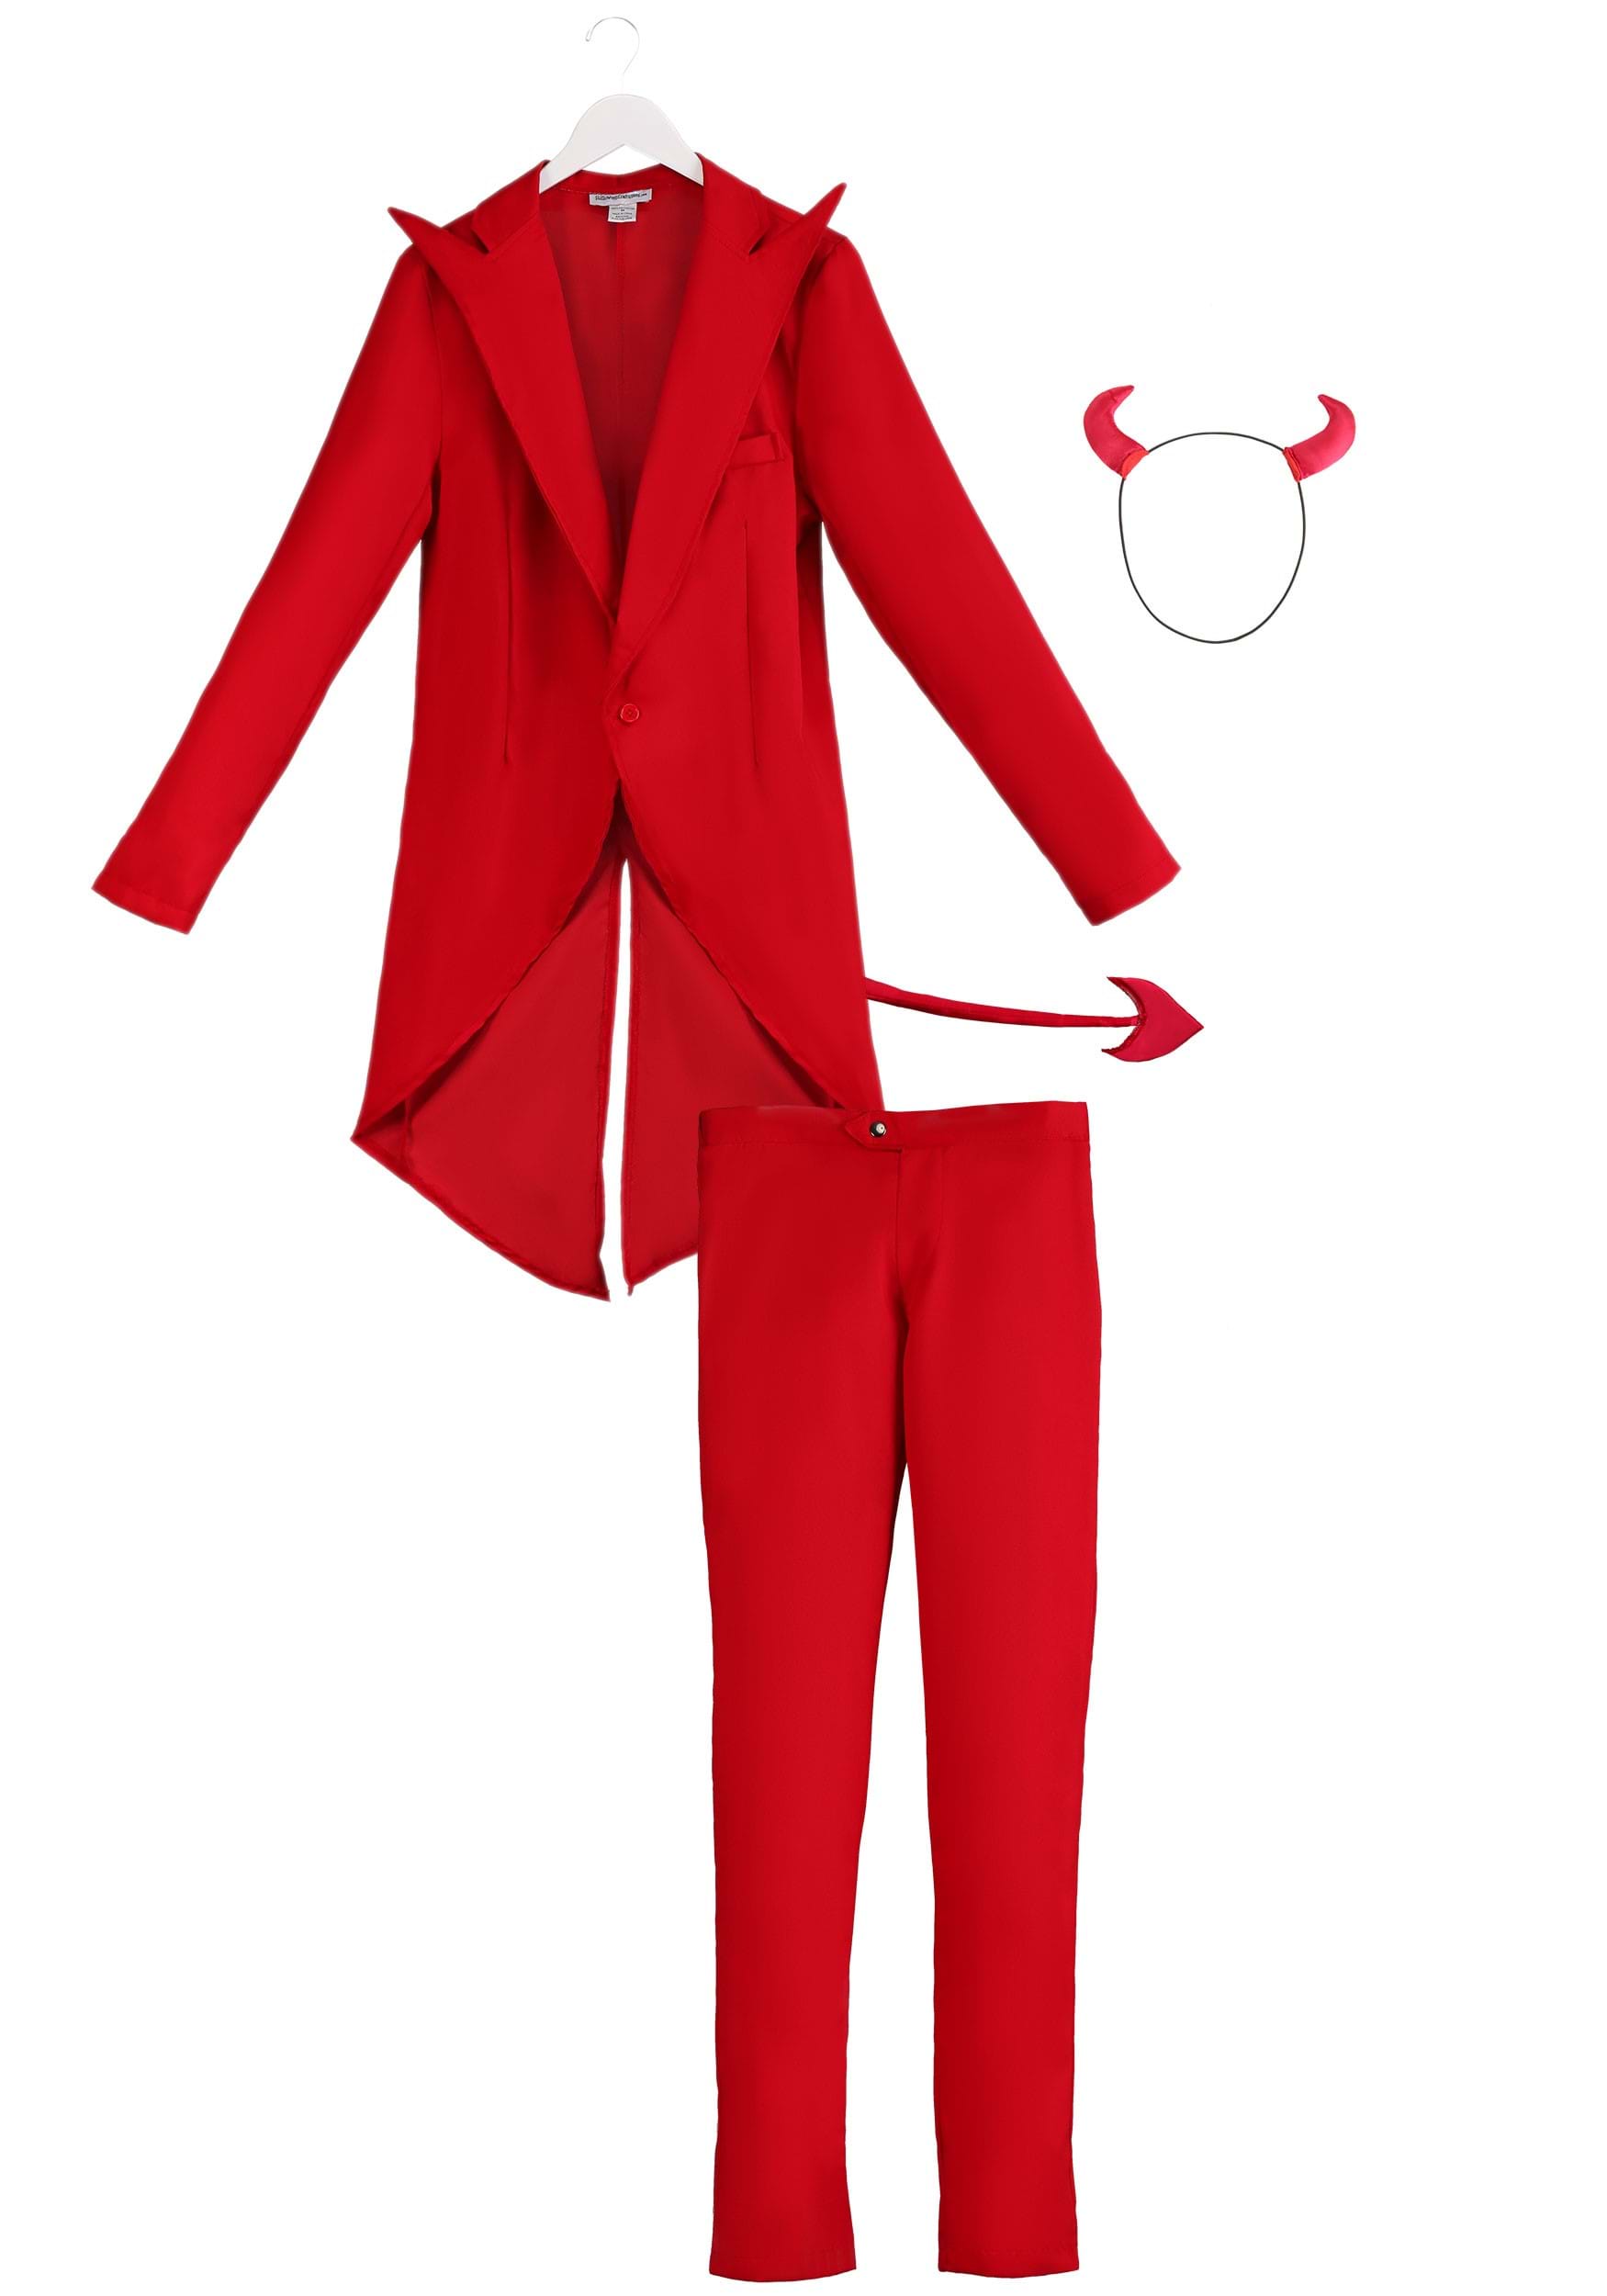 Red Suit Devil Costume for Men